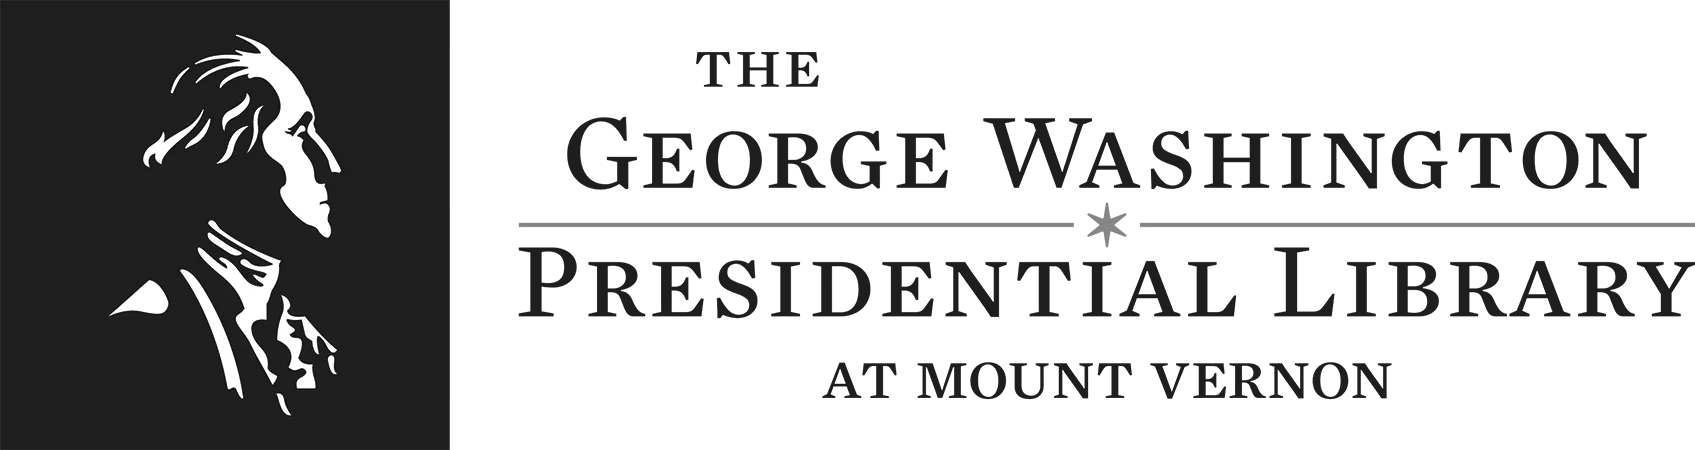 George Washington Presidential Library Logo